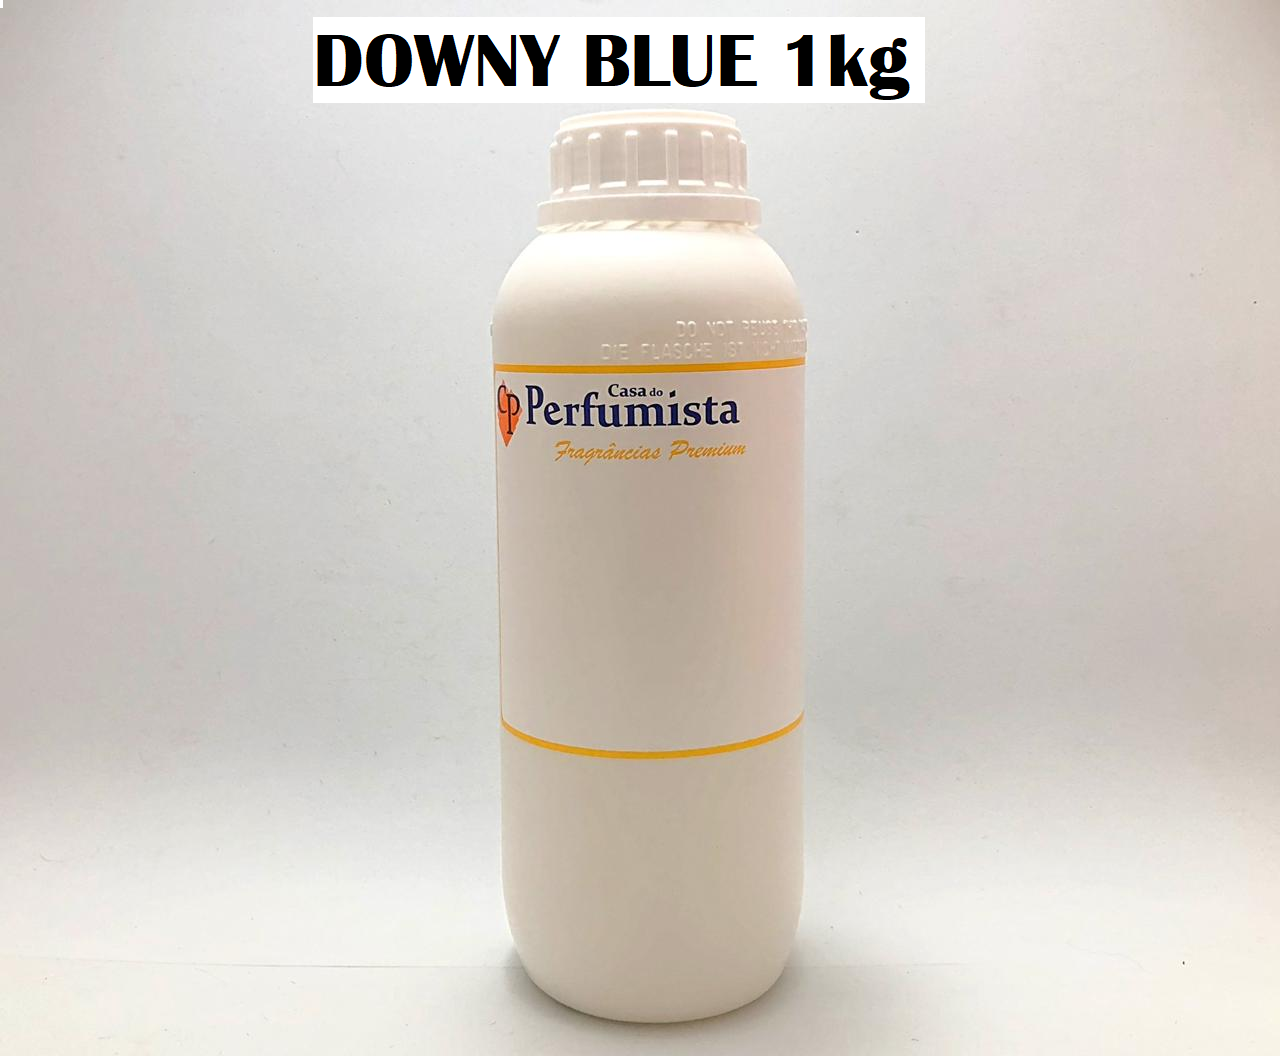 DOWNY BLUE - 1kg